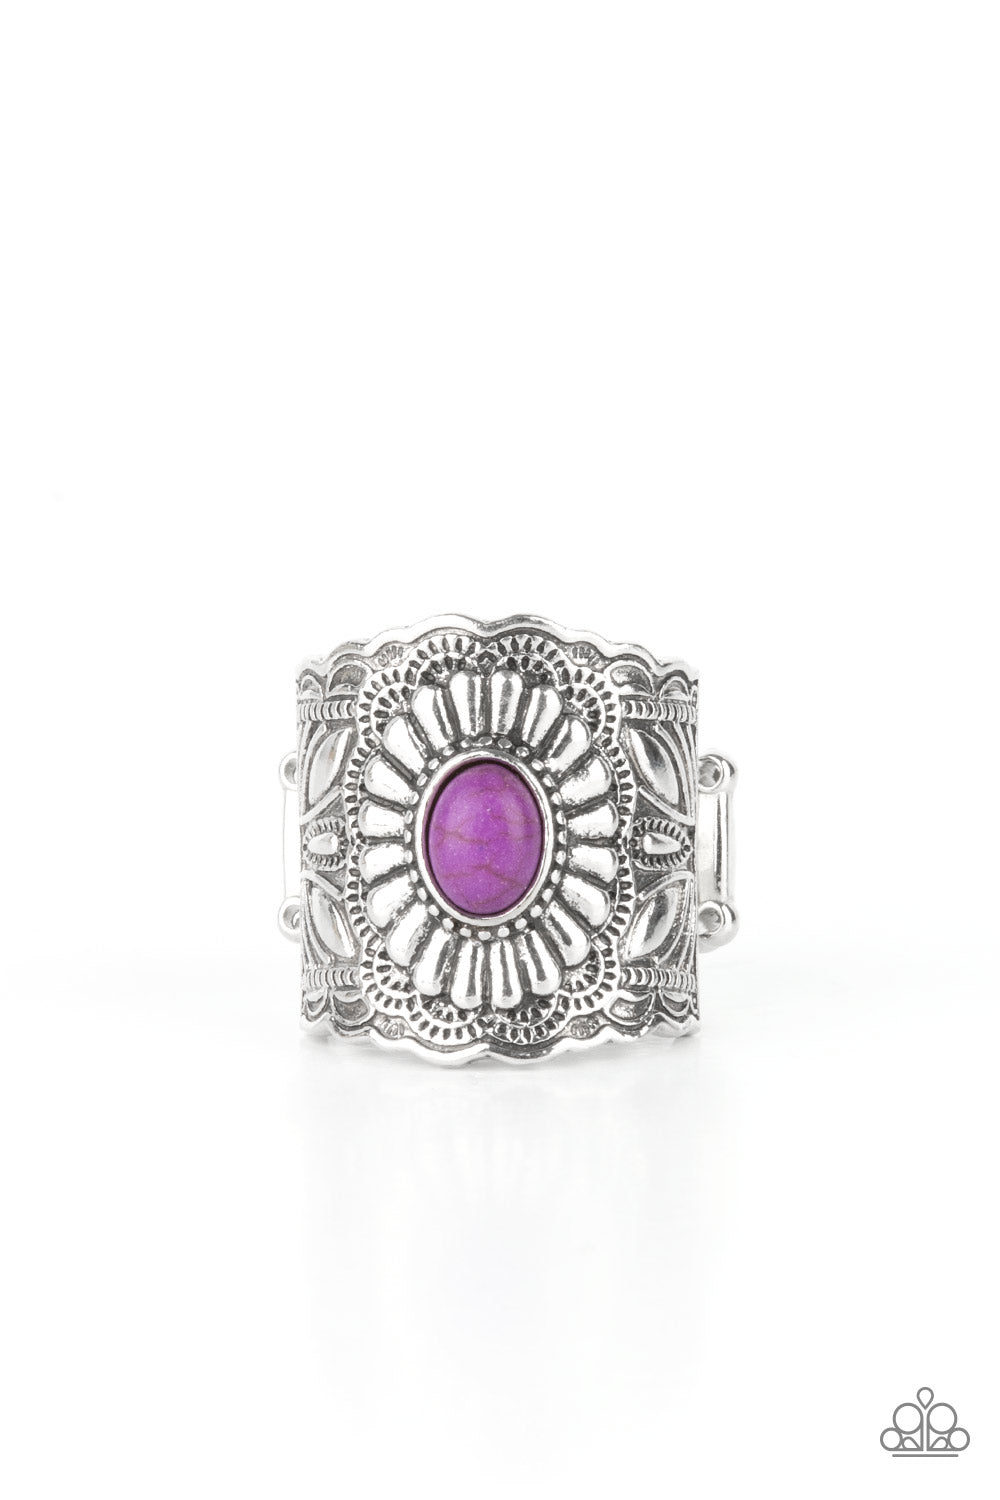 PAPARAZZI Exquisitely Ornamental - Purple - $5 Jewelry with Ashley Swint